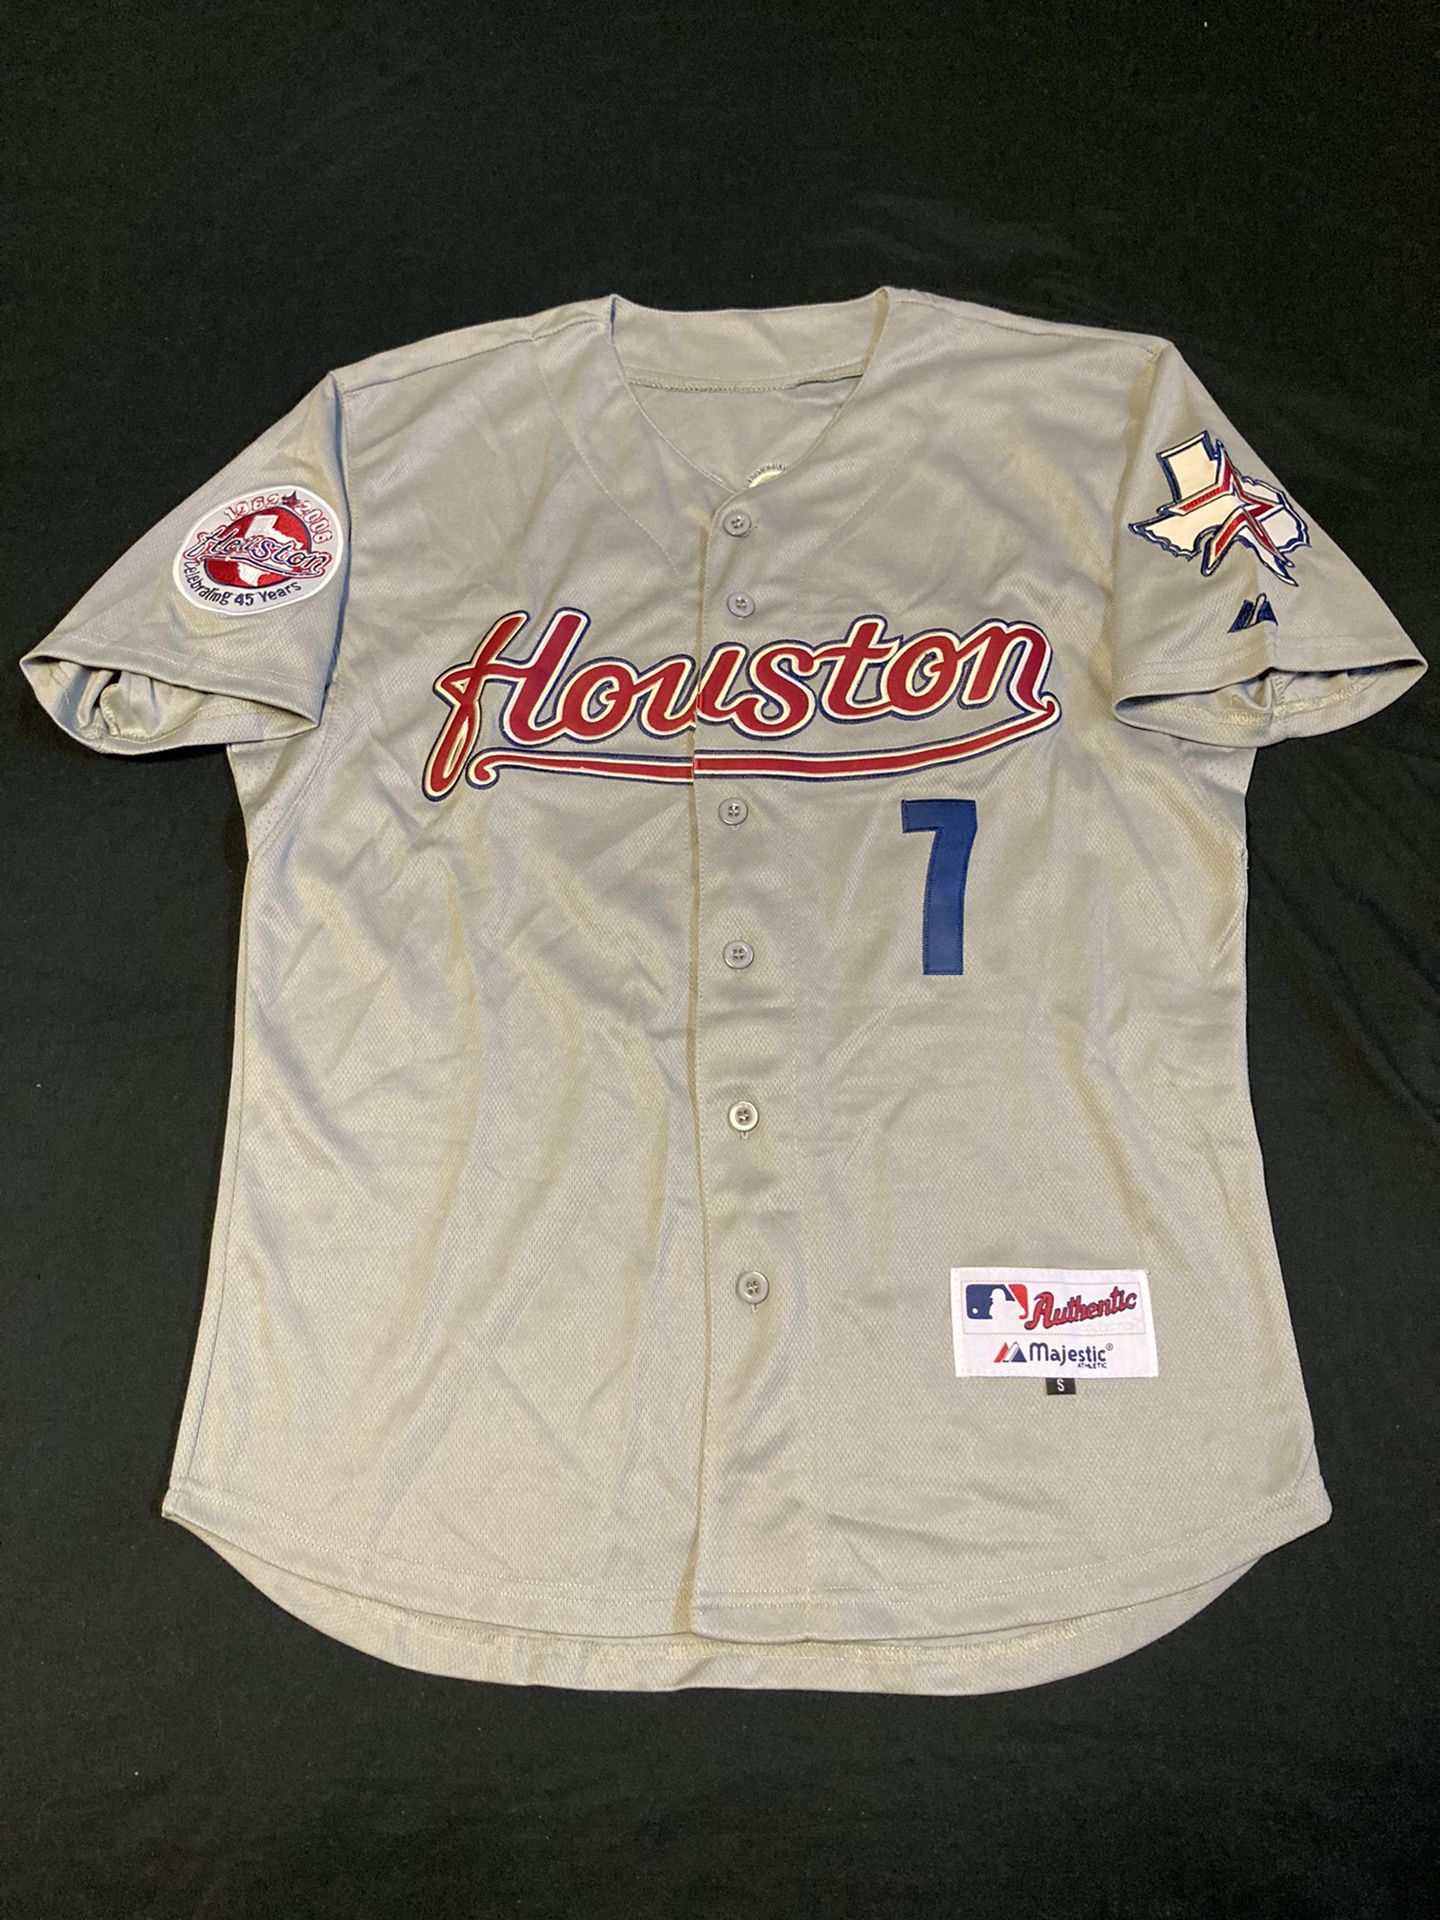 Astros Biggio '06 Jersey for Sale in Houston, TX - OfferUp